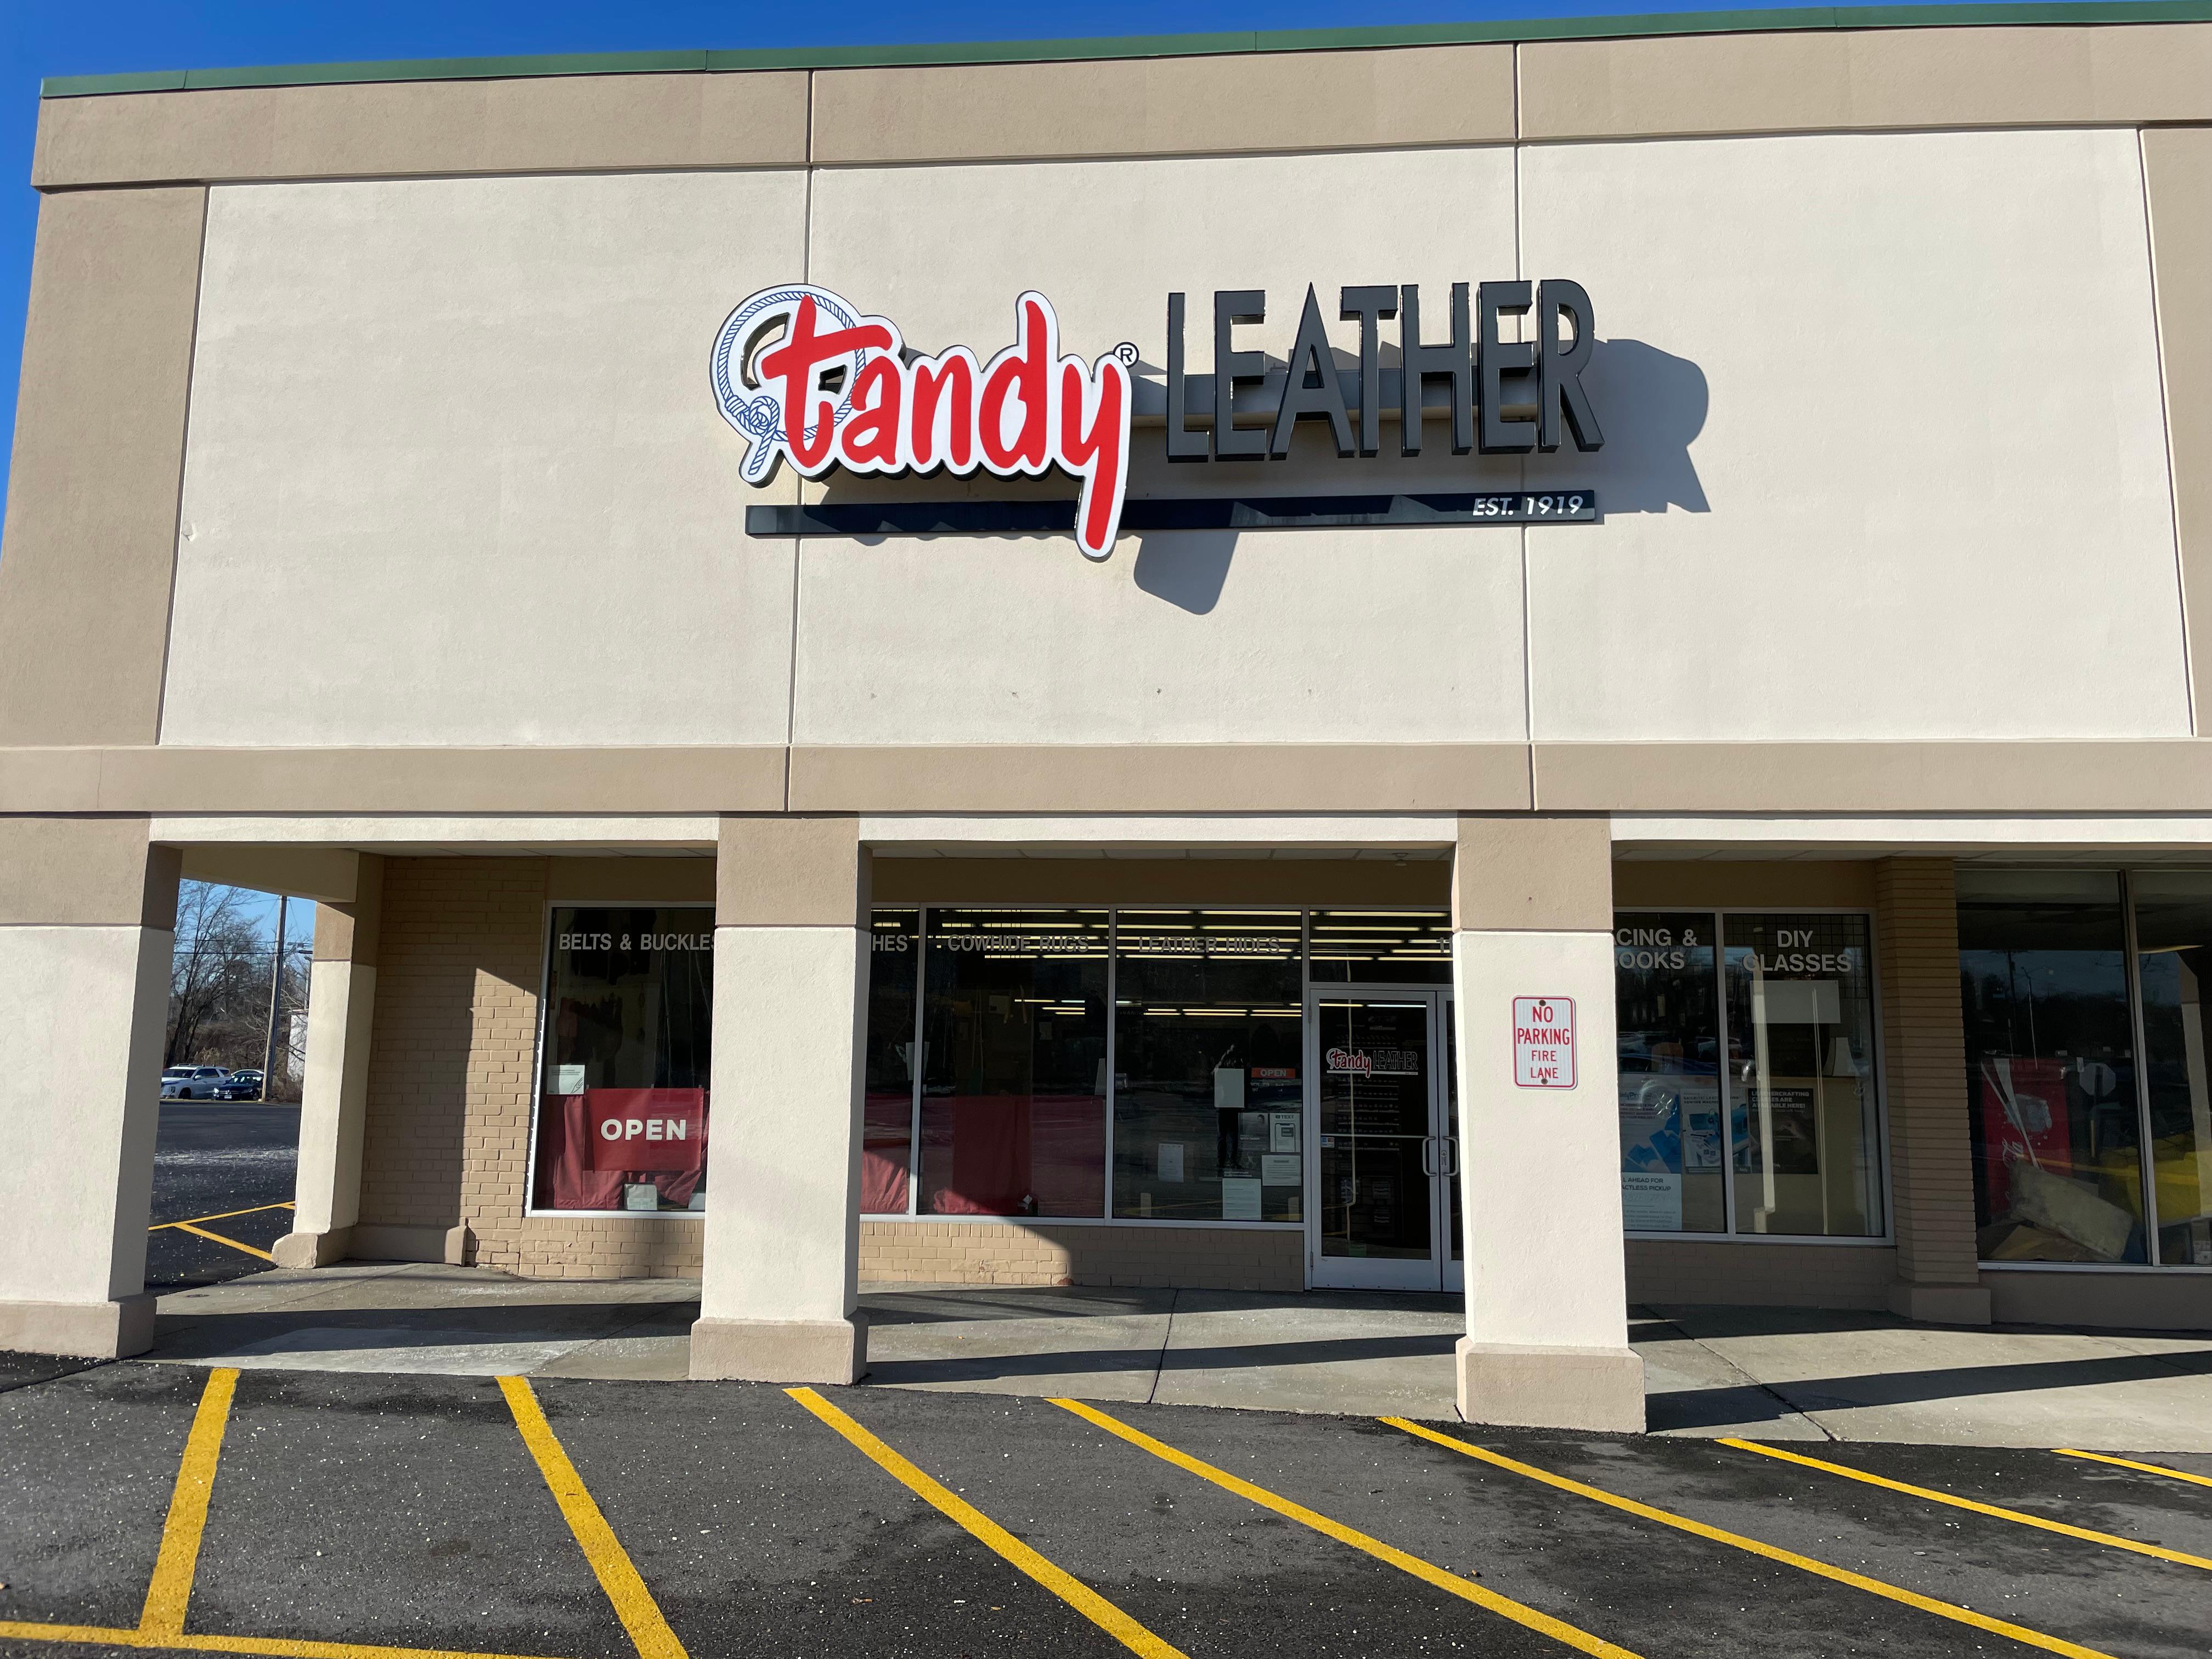 Philadelphia Store #181 — Tandy Leather, Inc.